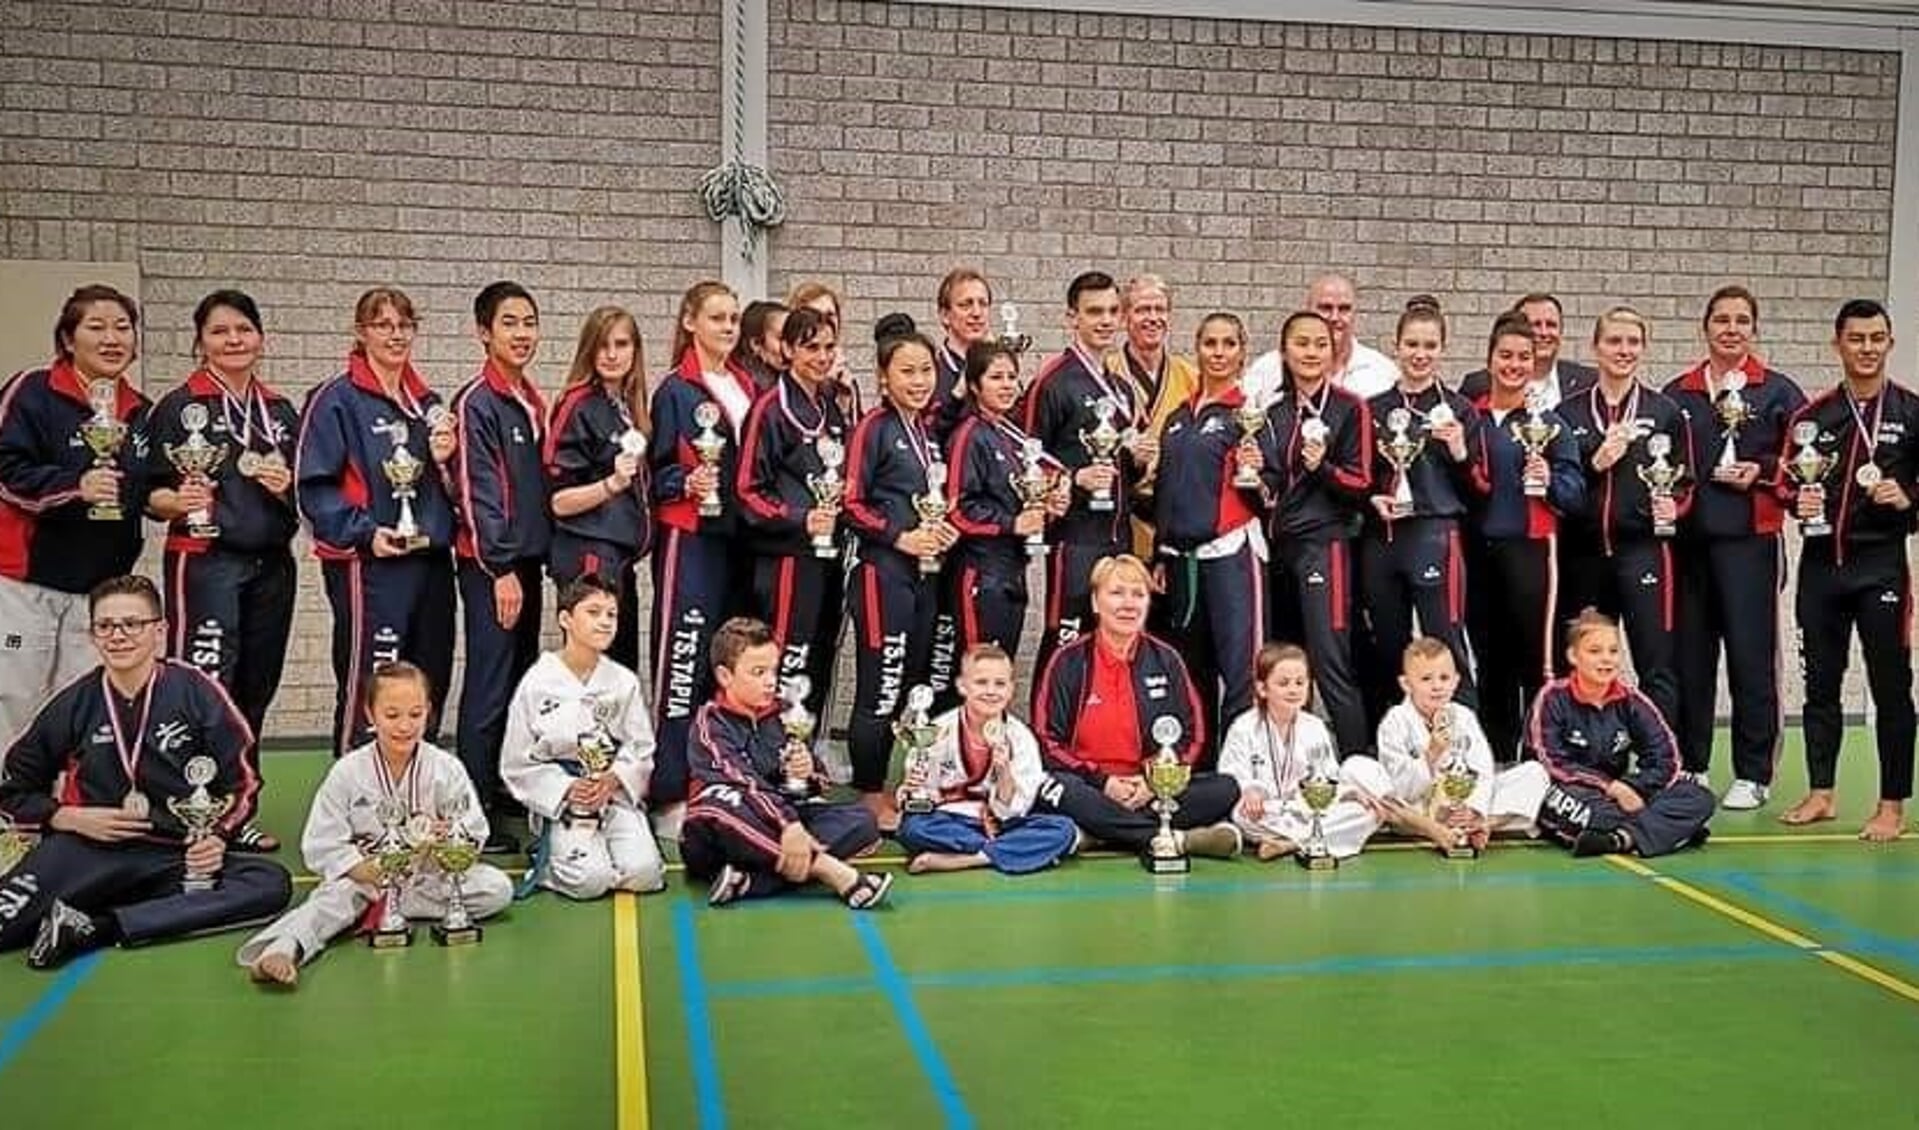 Taekwondoschool Tapia pakt veel medailles op NK